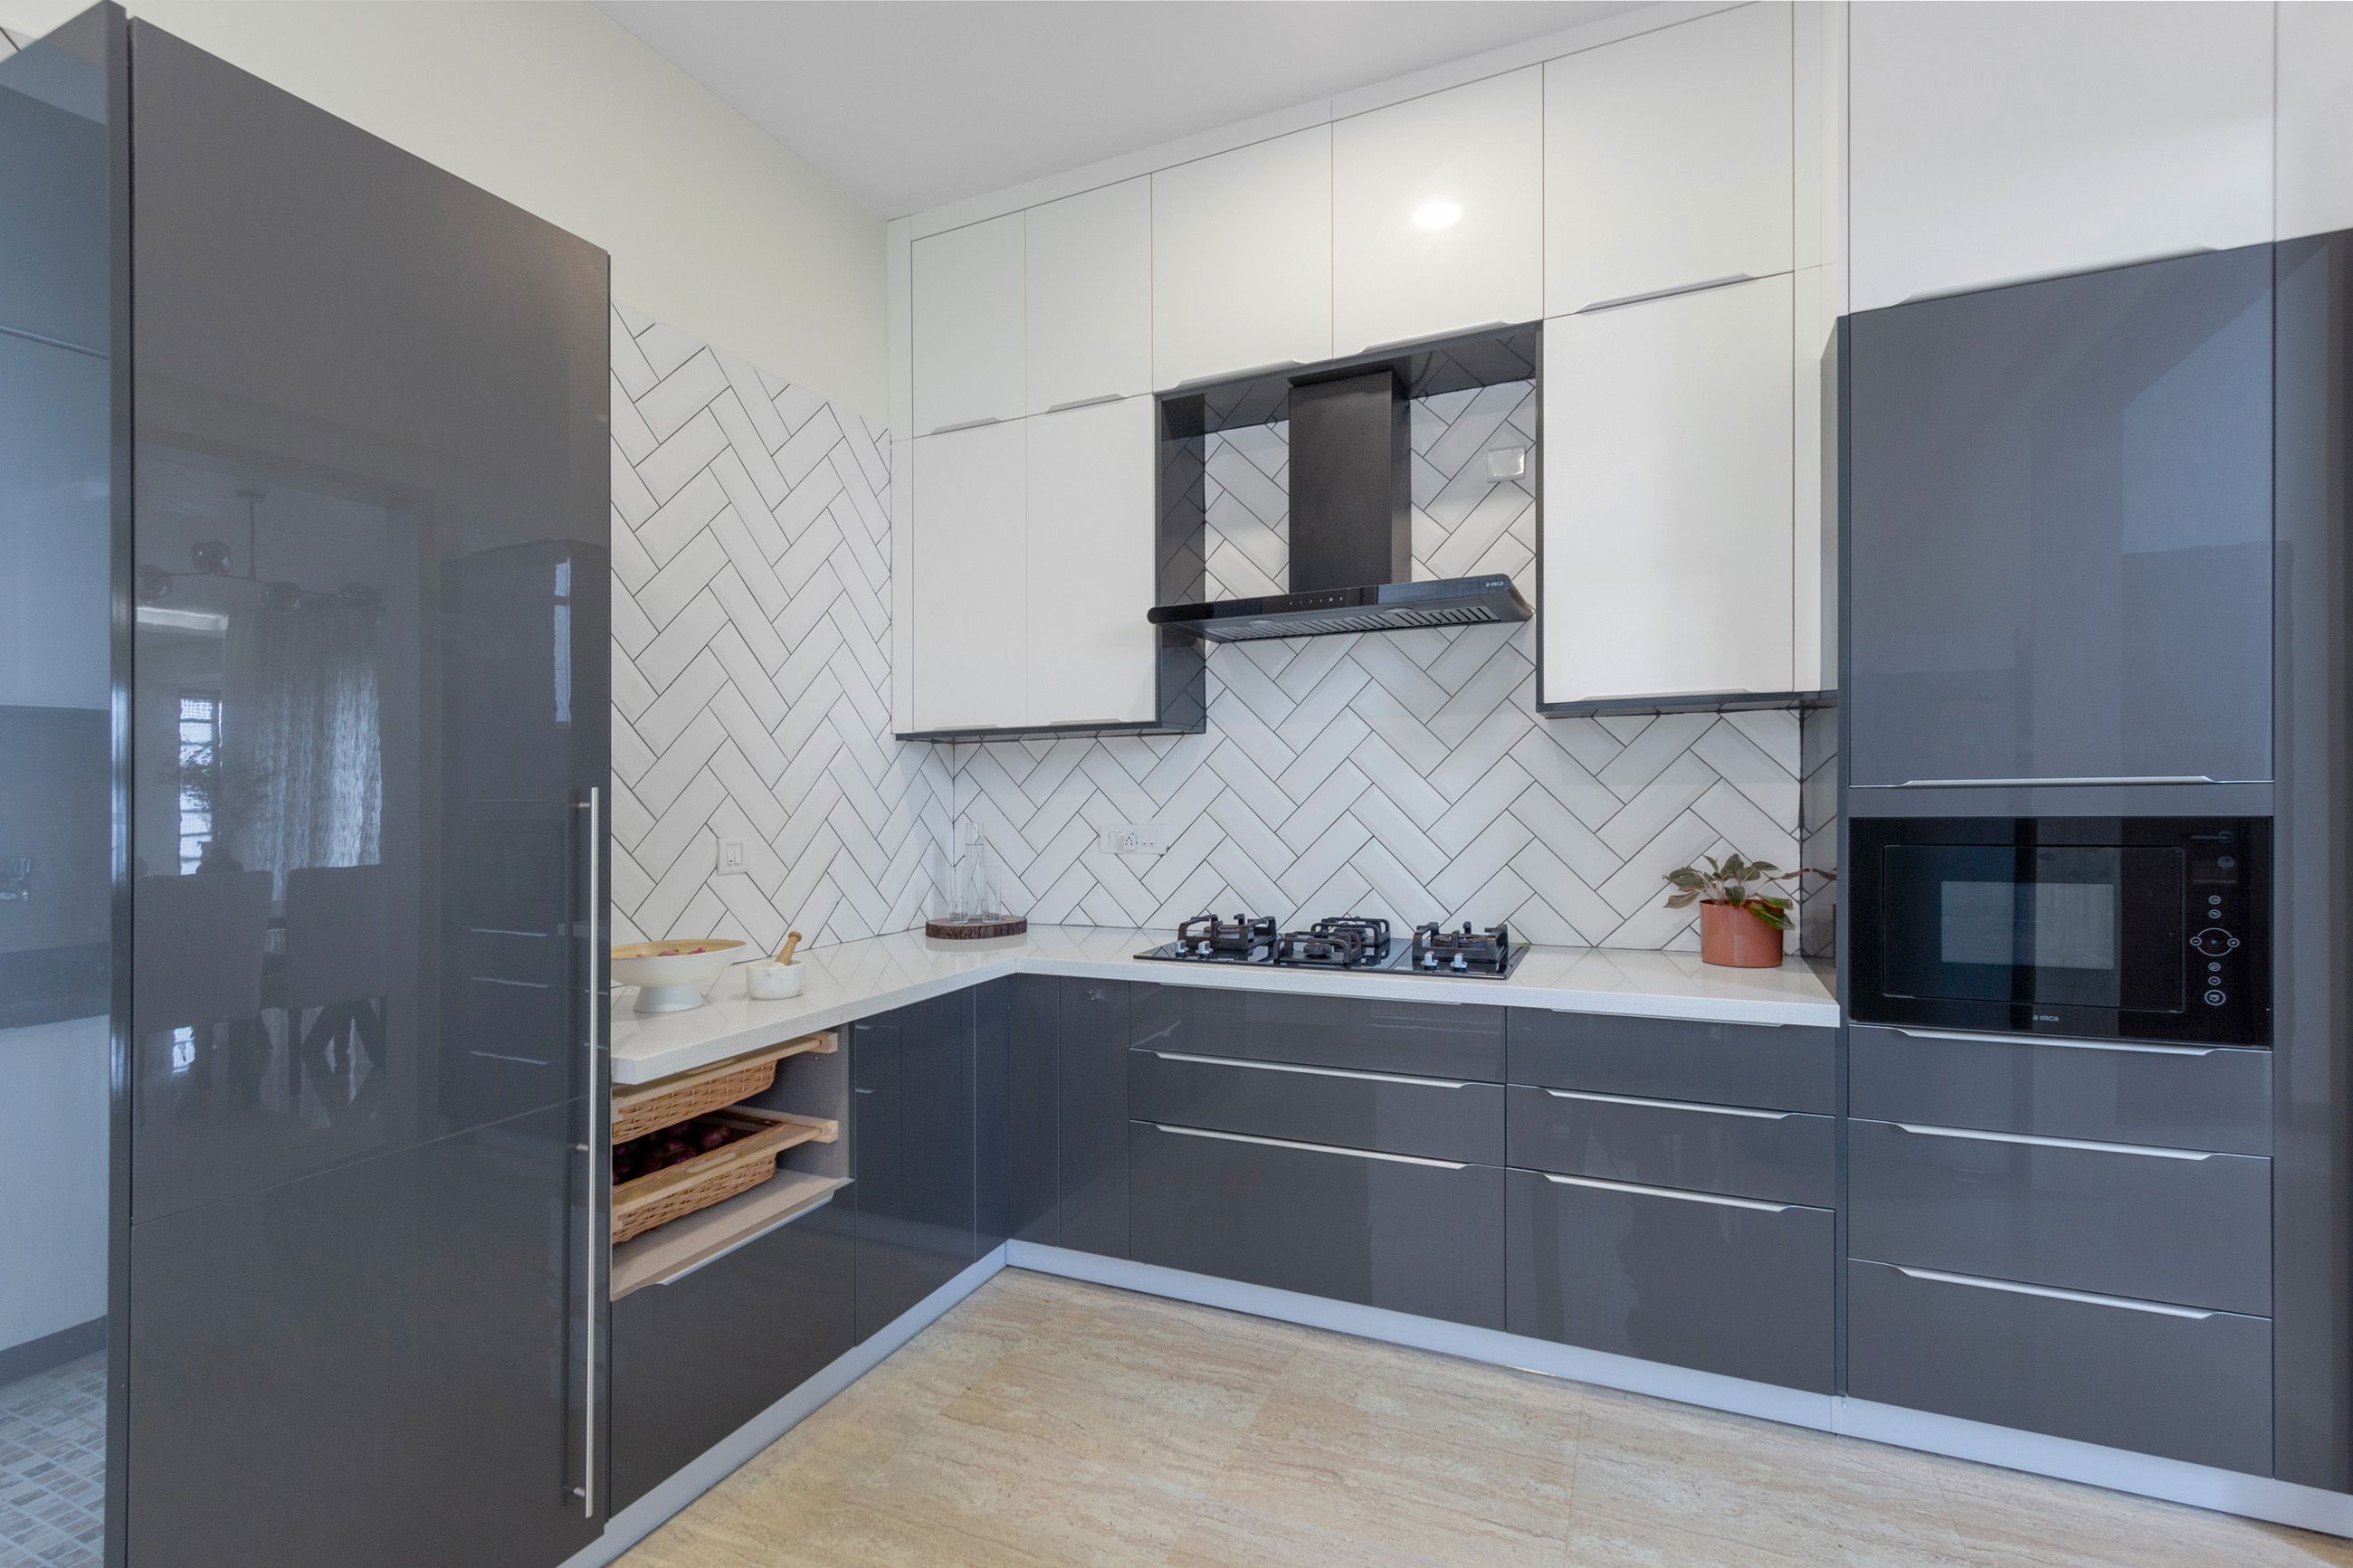 Contemporary Modular Glossy L-Shaped Kitchen Design With White Herringbone Backsplash